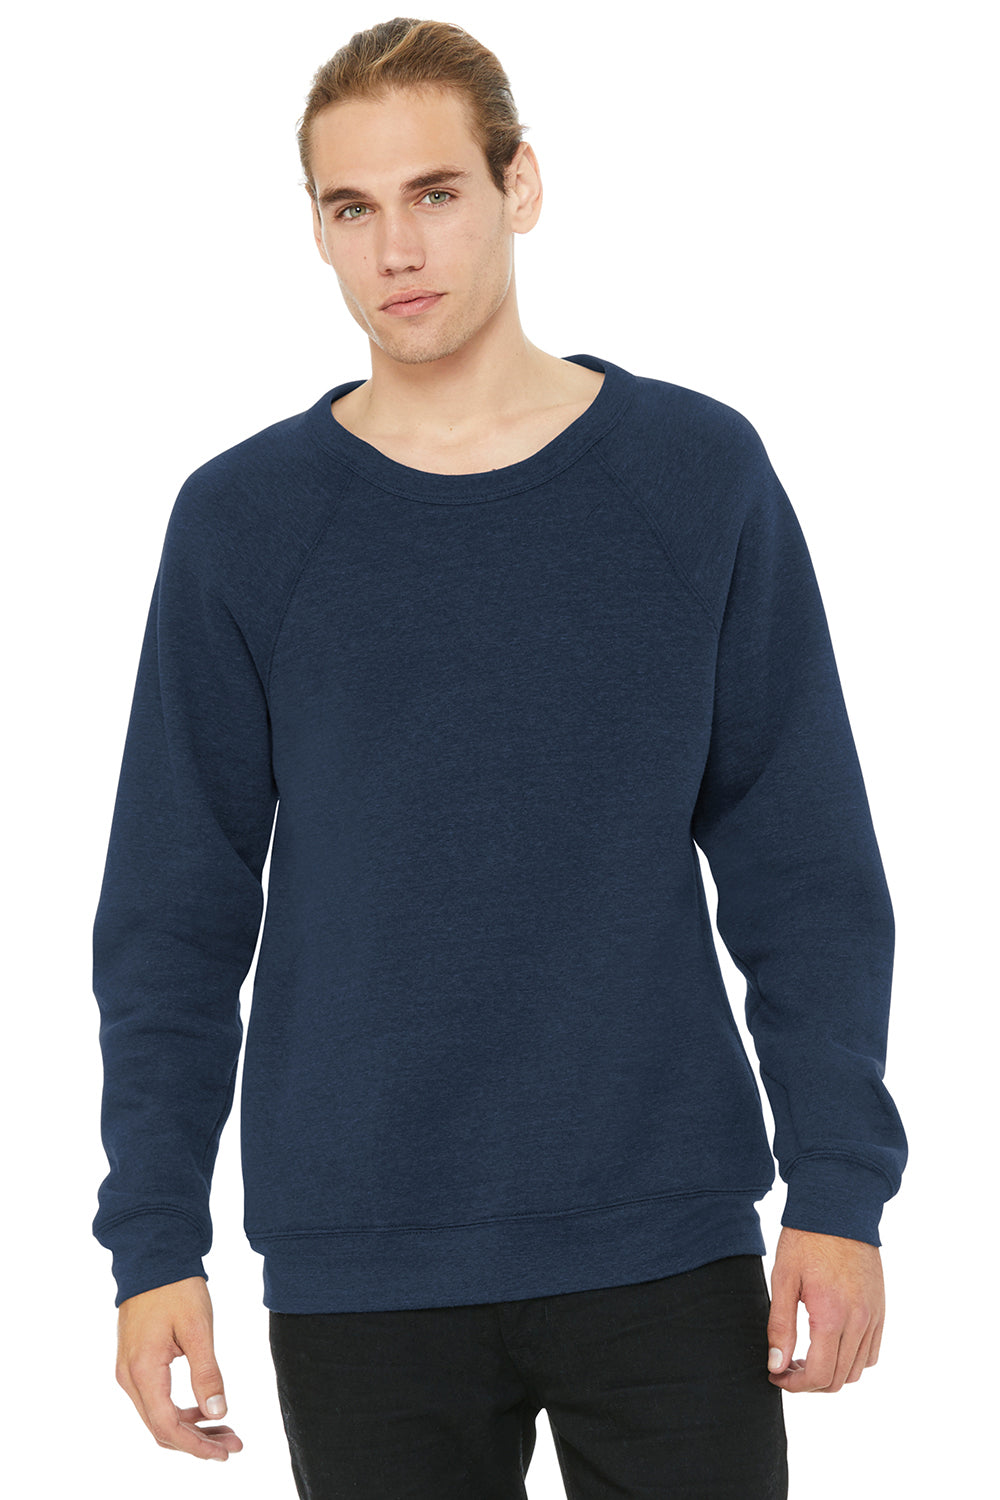 Bella + Canvas BC3901/3901 Mens Sponge Fleece Crewneck Sweatshirt Heather Navy Blue Model Front